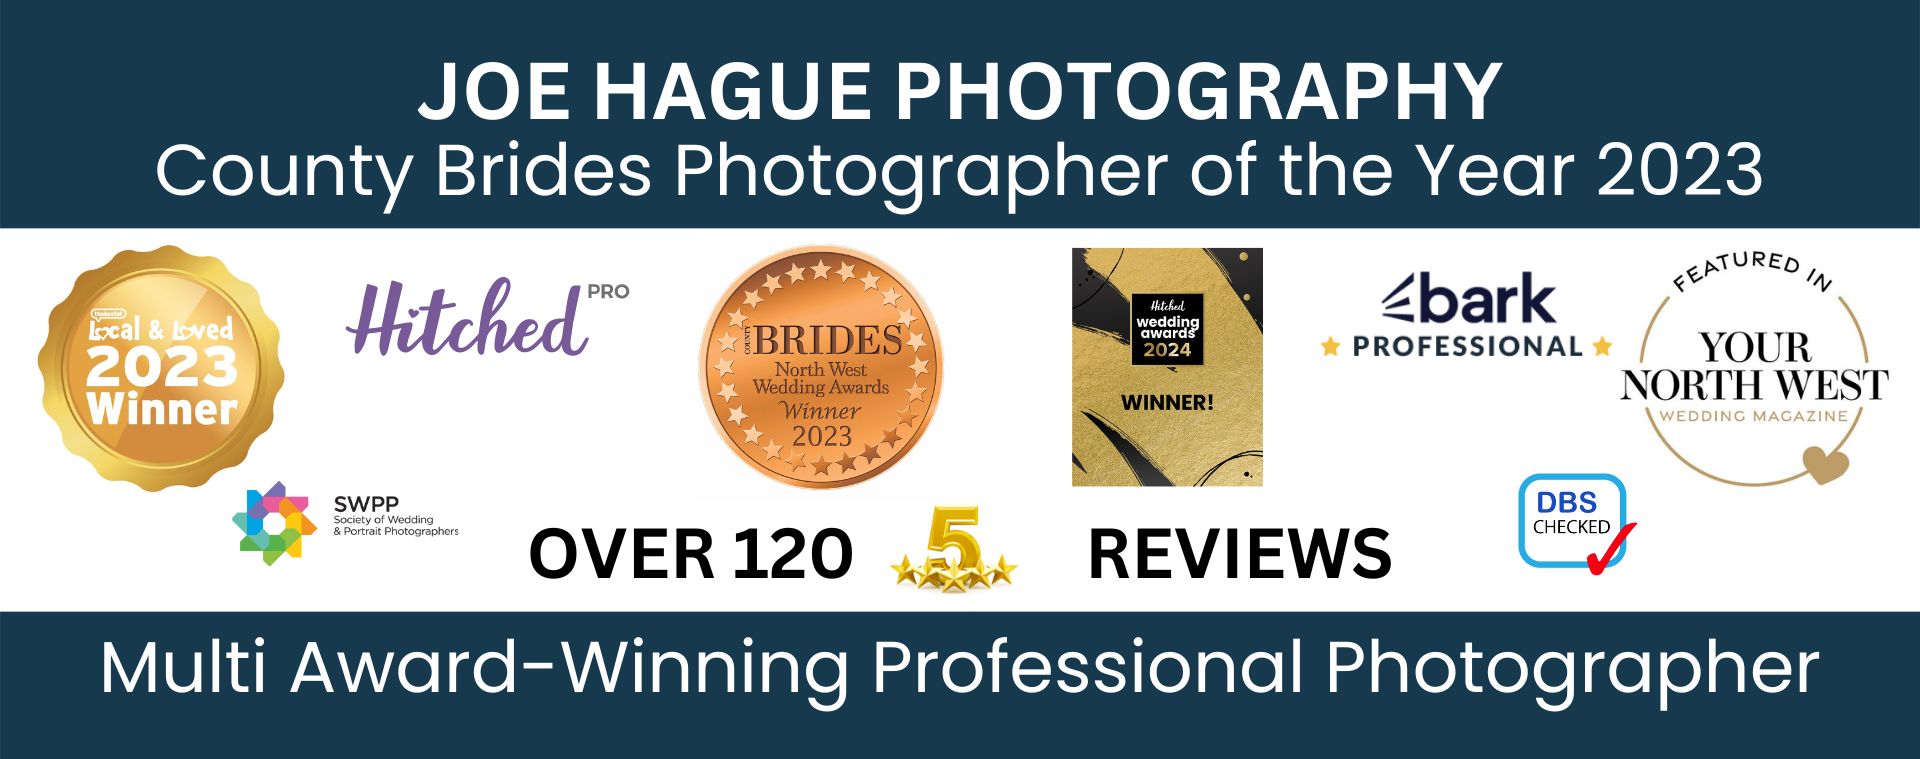 Joe Hague Photography
Multi Award Winning Wedding Photographer